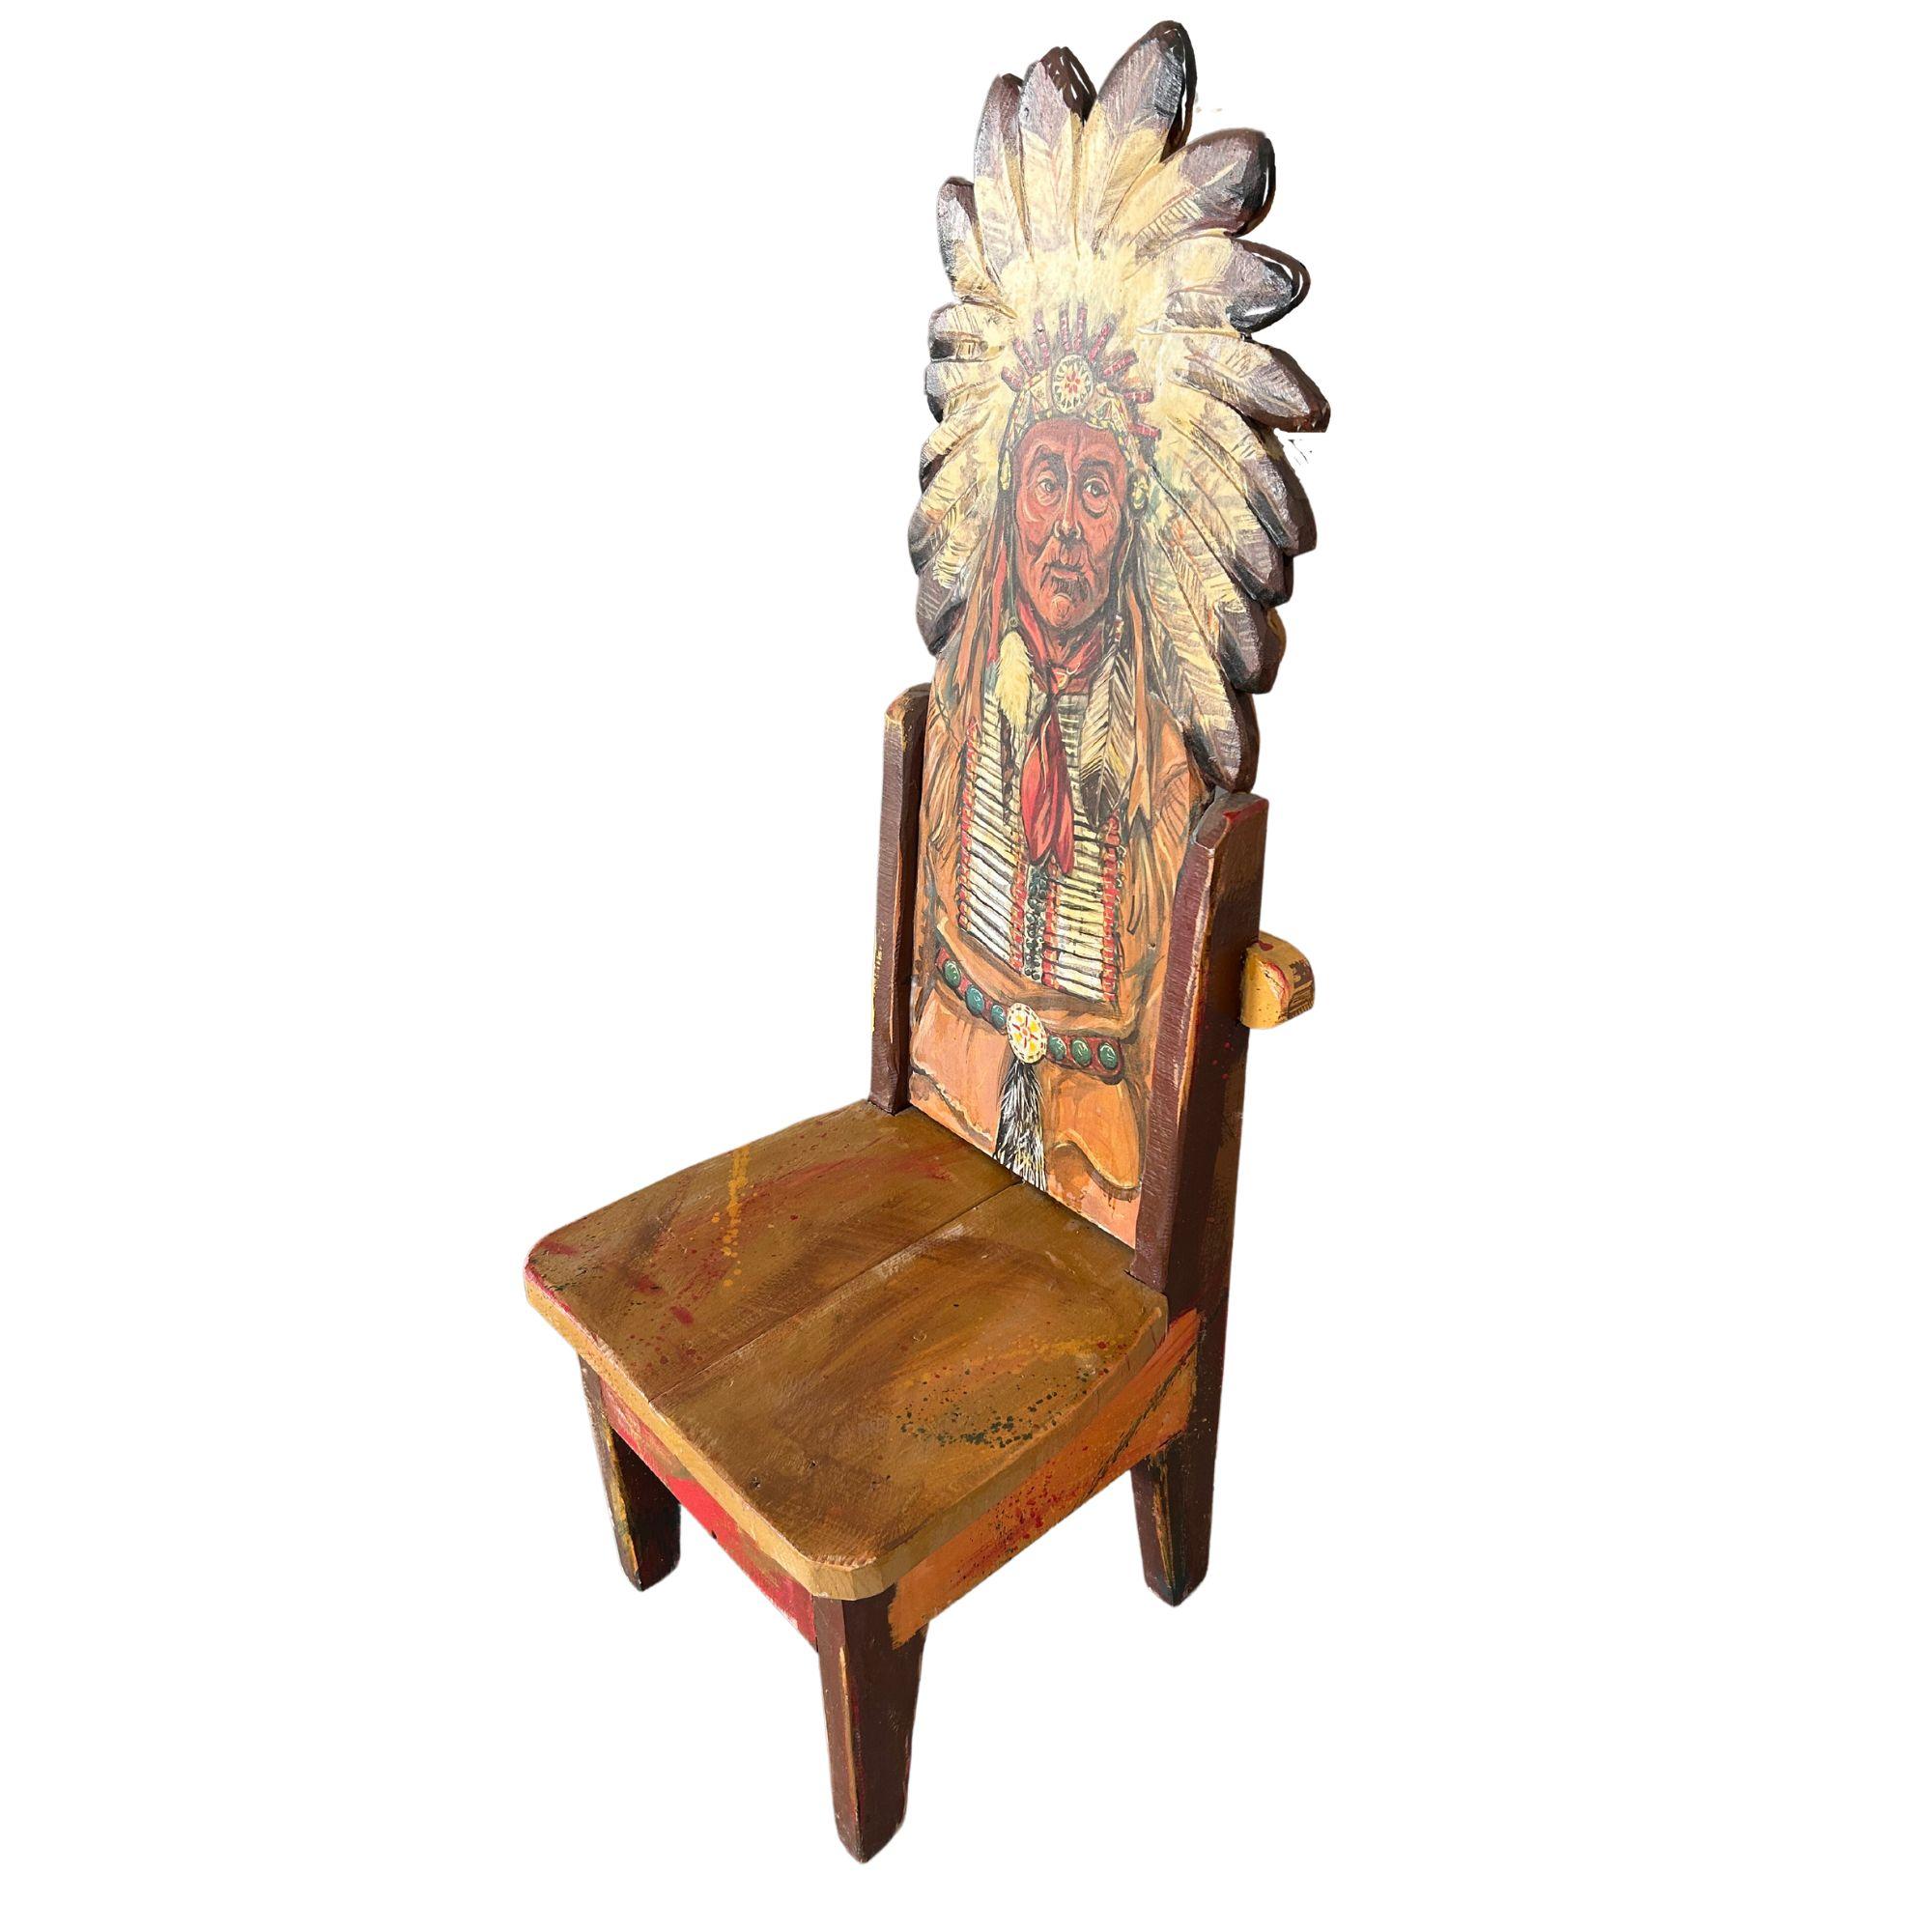 Native American Hand Painted Folk Art Chair.